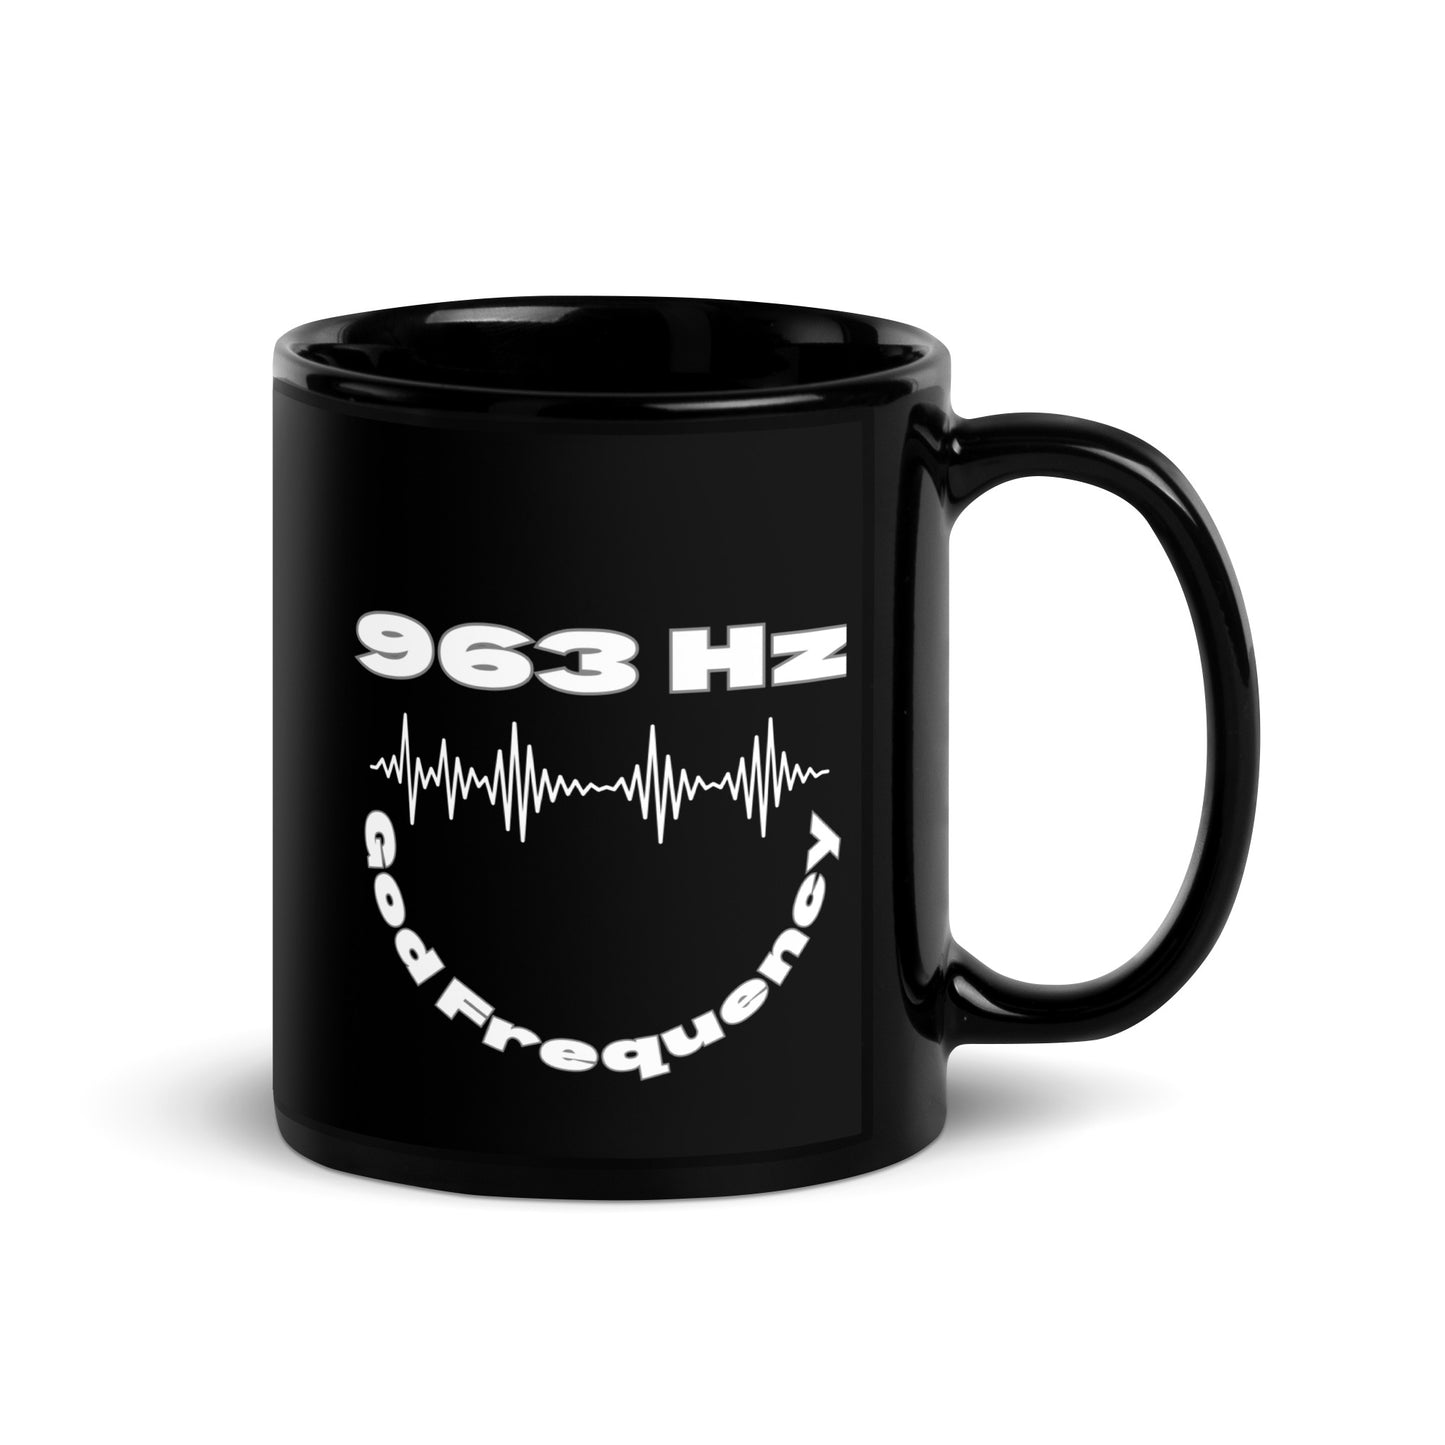 963 Hz God Frequency Higher Consciousness Chakra Healing Black Coffee Mug